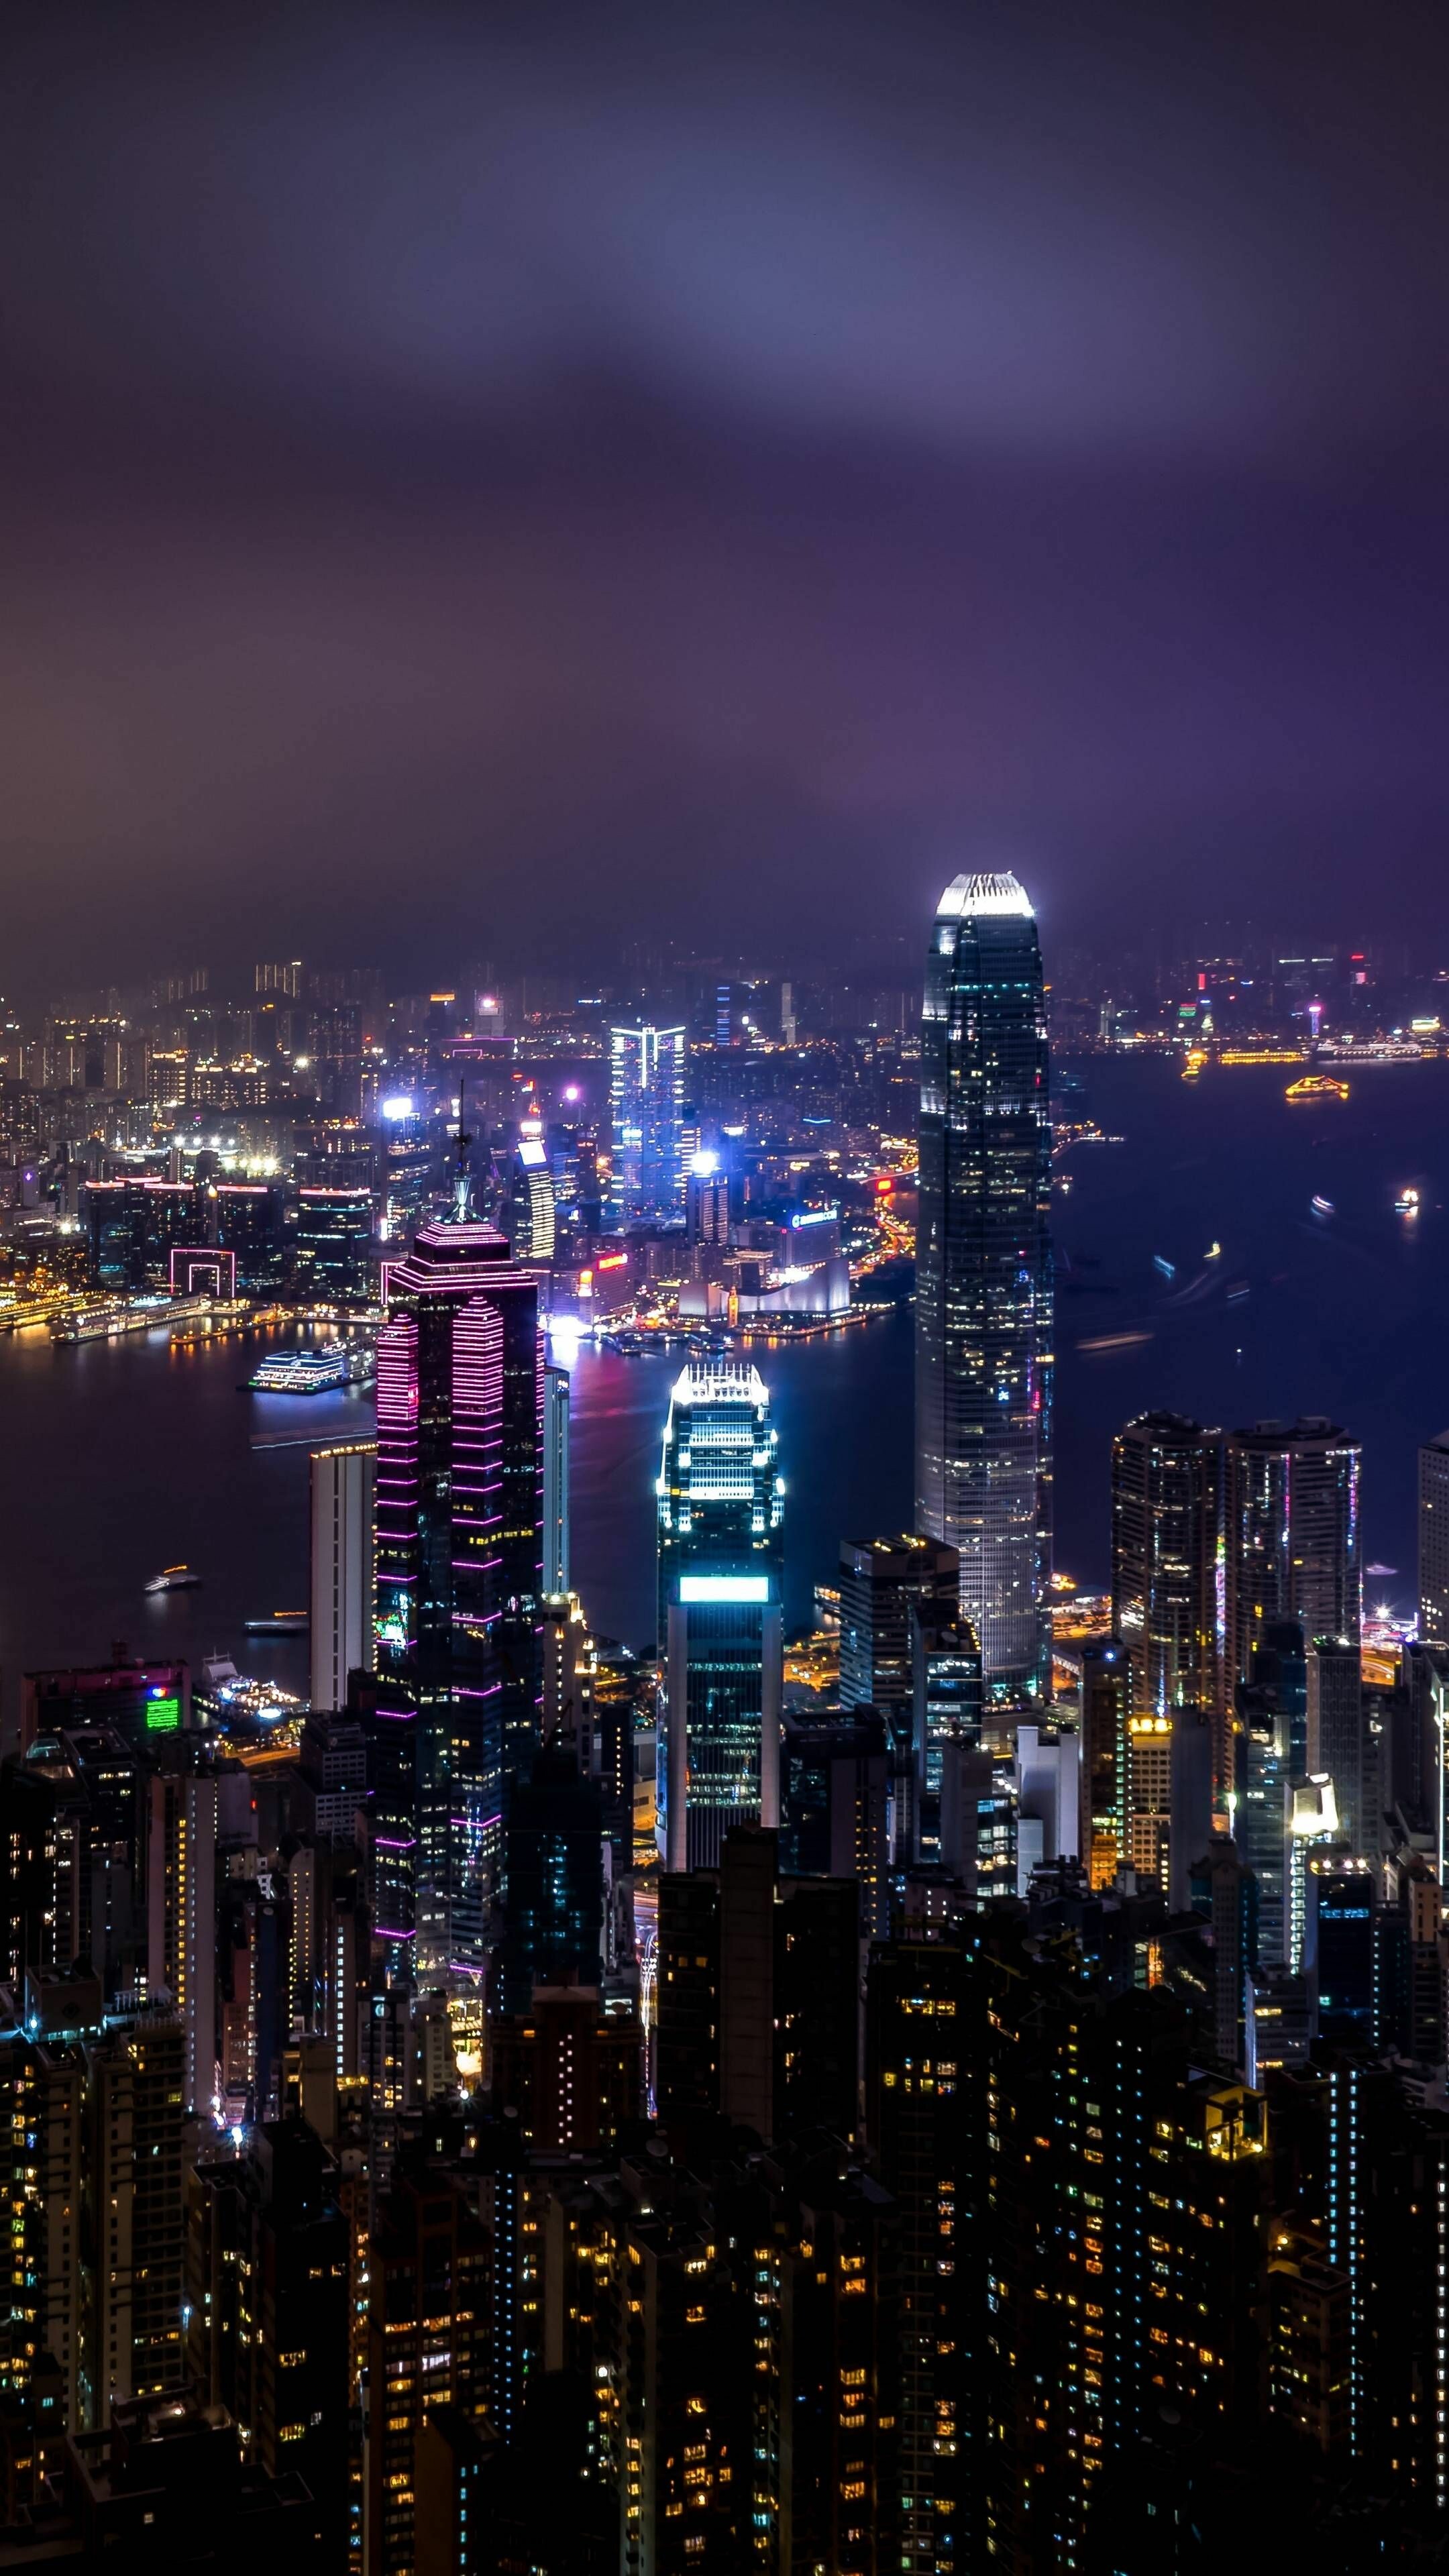 Hong Kong: Skyscrapers, City lights at night, HKSAR. 2160x3840 4K Wallpaper.